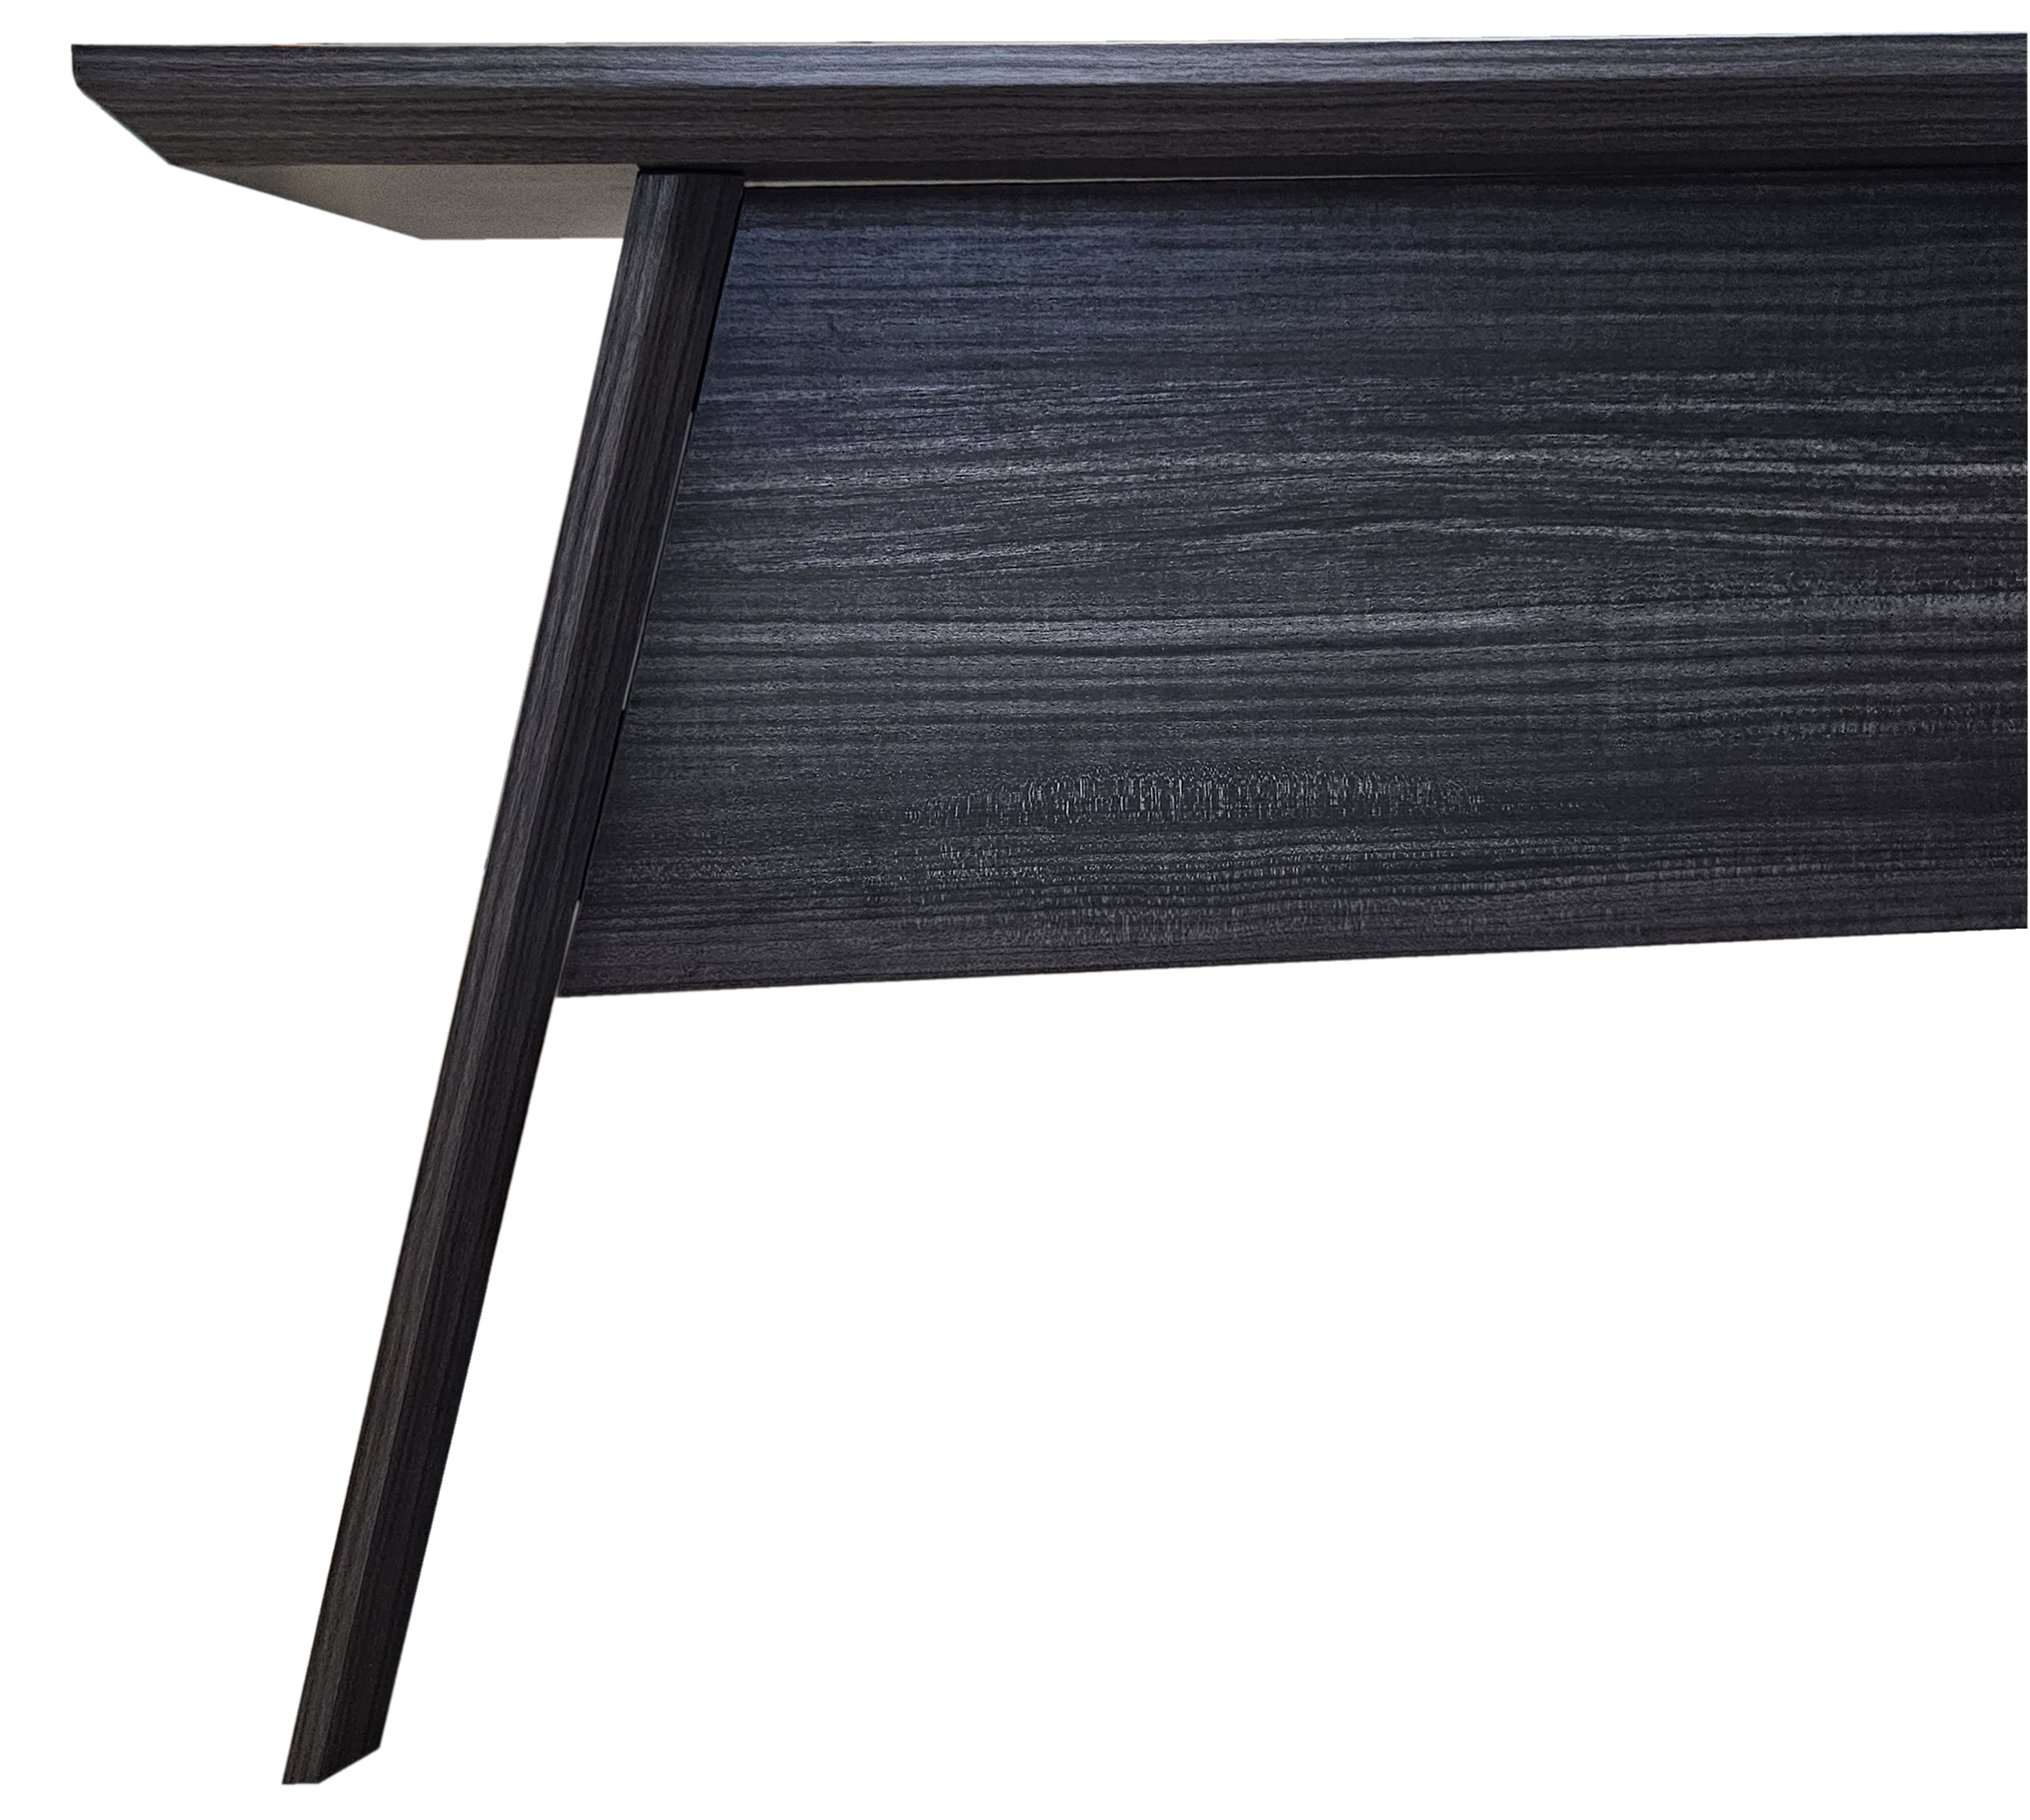 Modern Grey Oak Veneer Executive Office Desk with Built in Pedestal and Inclined Leg - 1800mm - DG19-S-D18